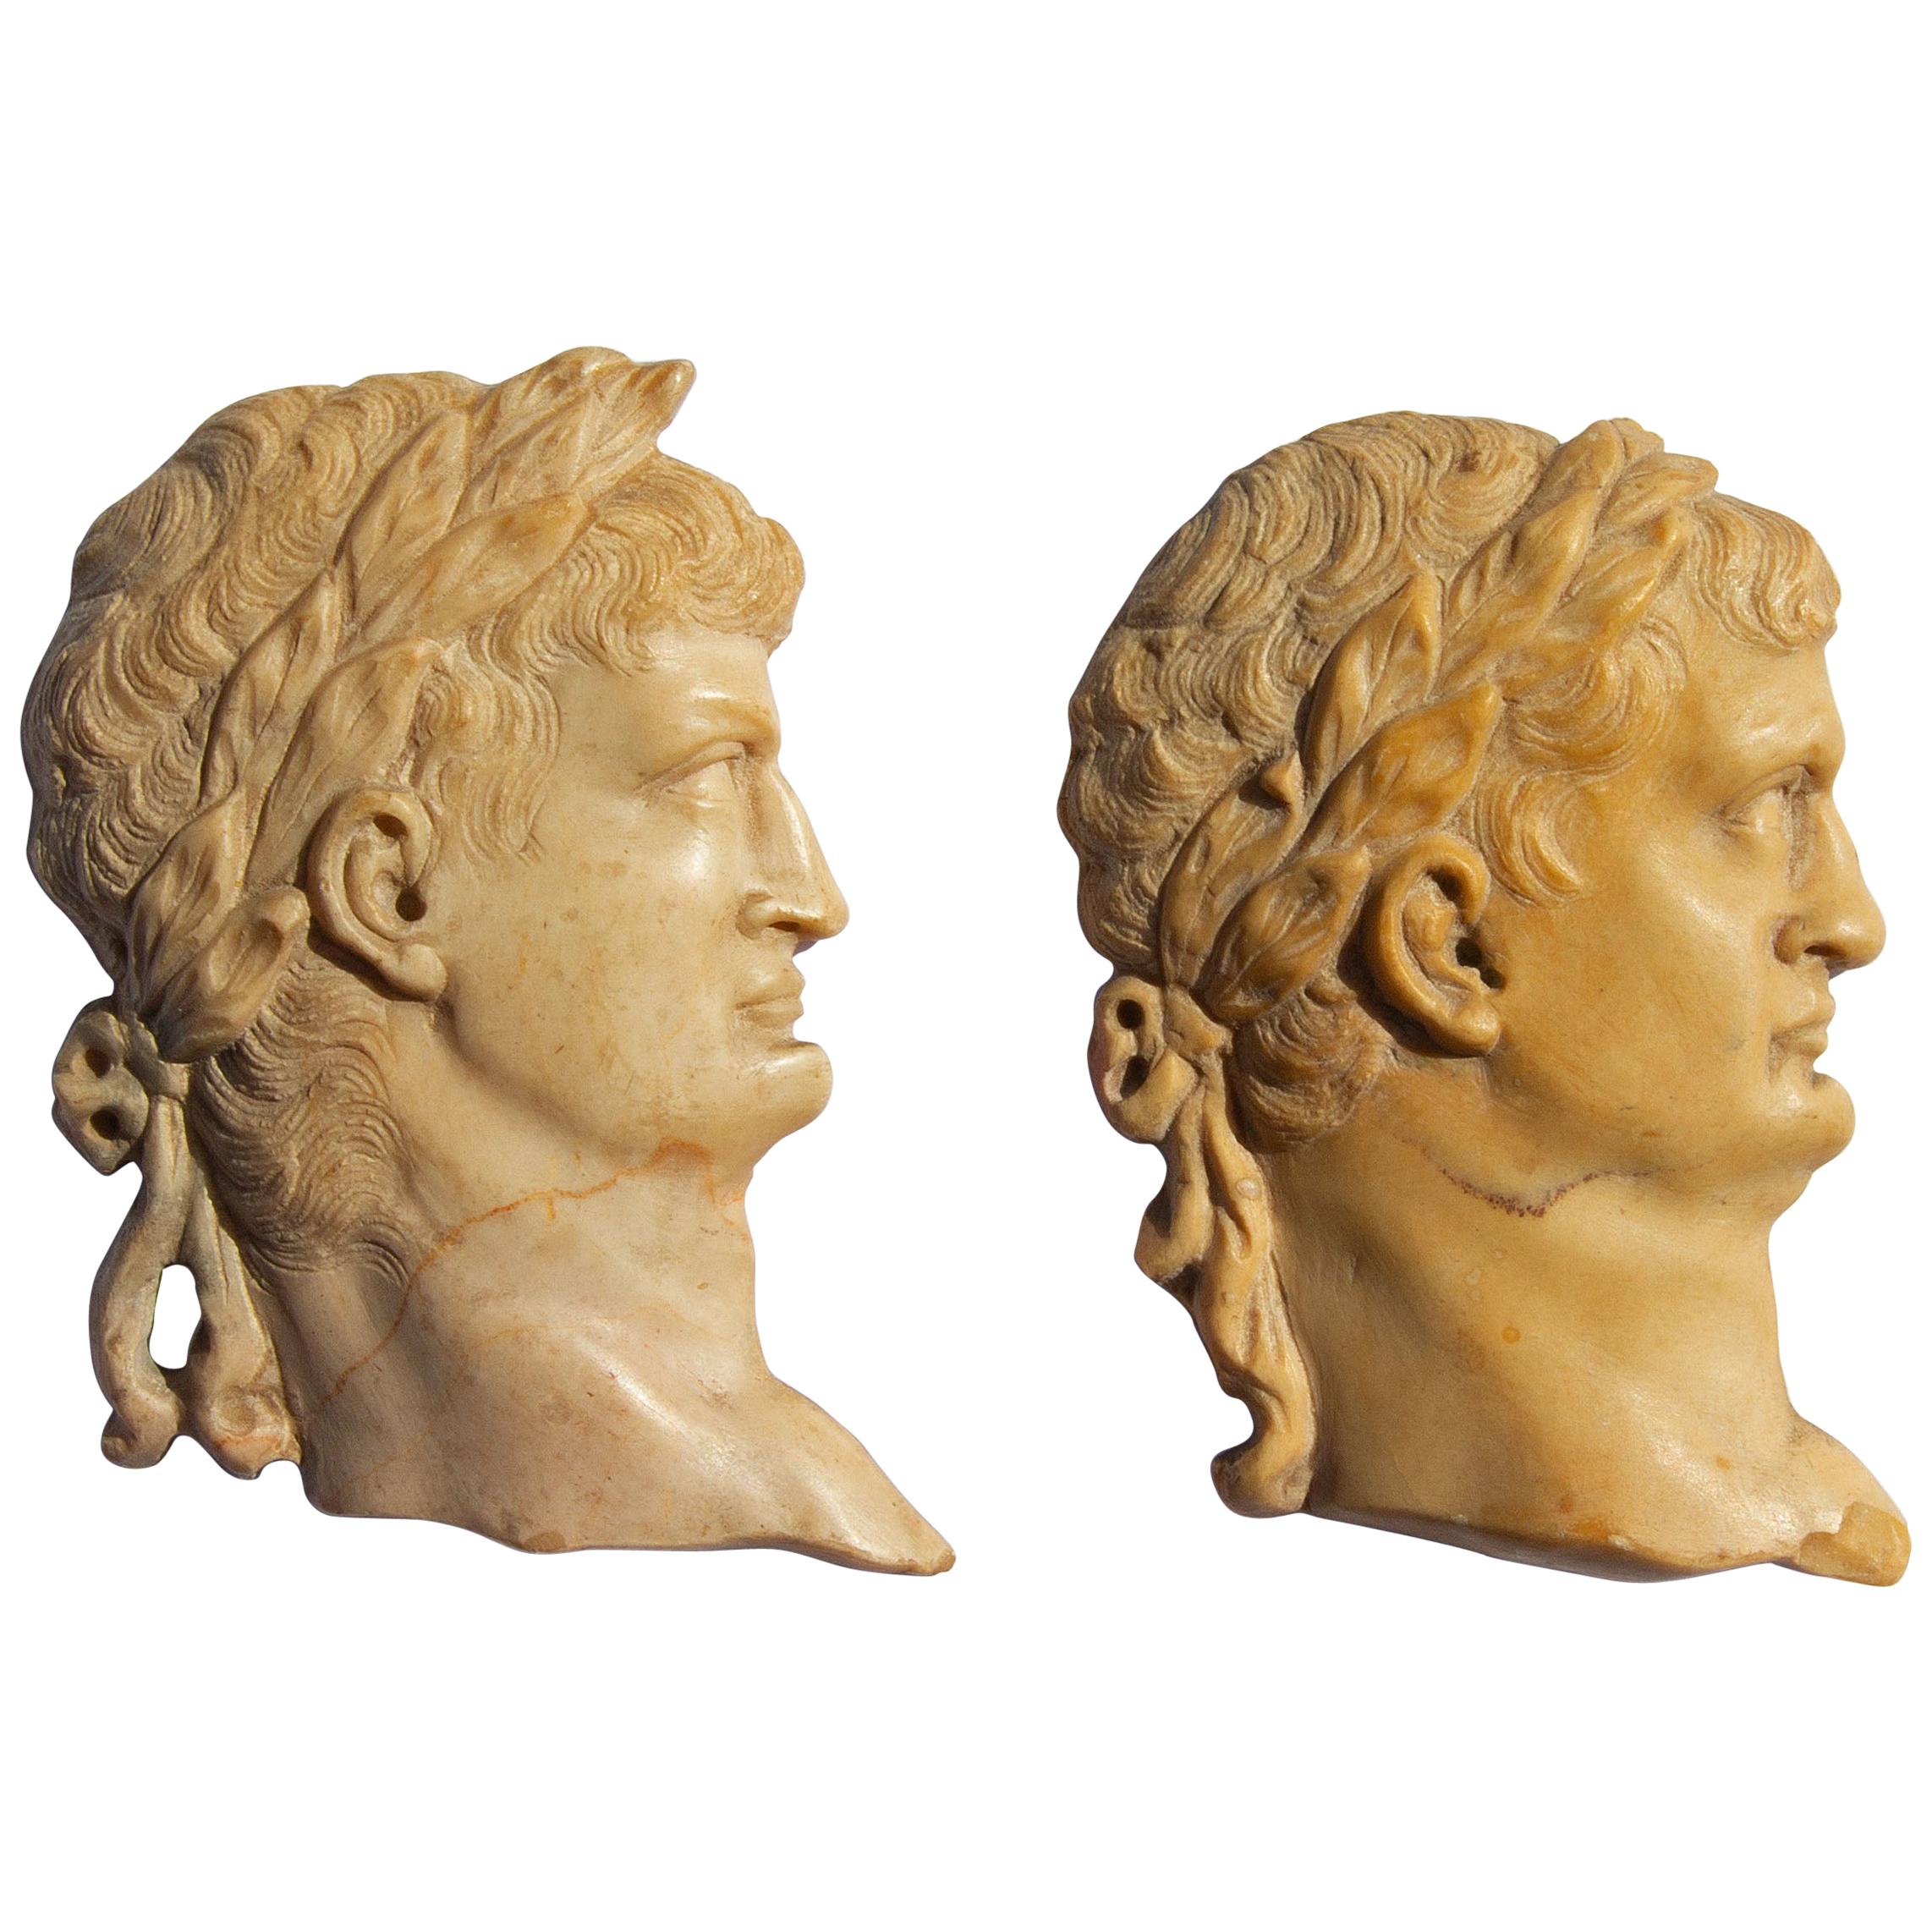 Grand Tour Pair of Marble Relief Carvings of Roman Dignitaries